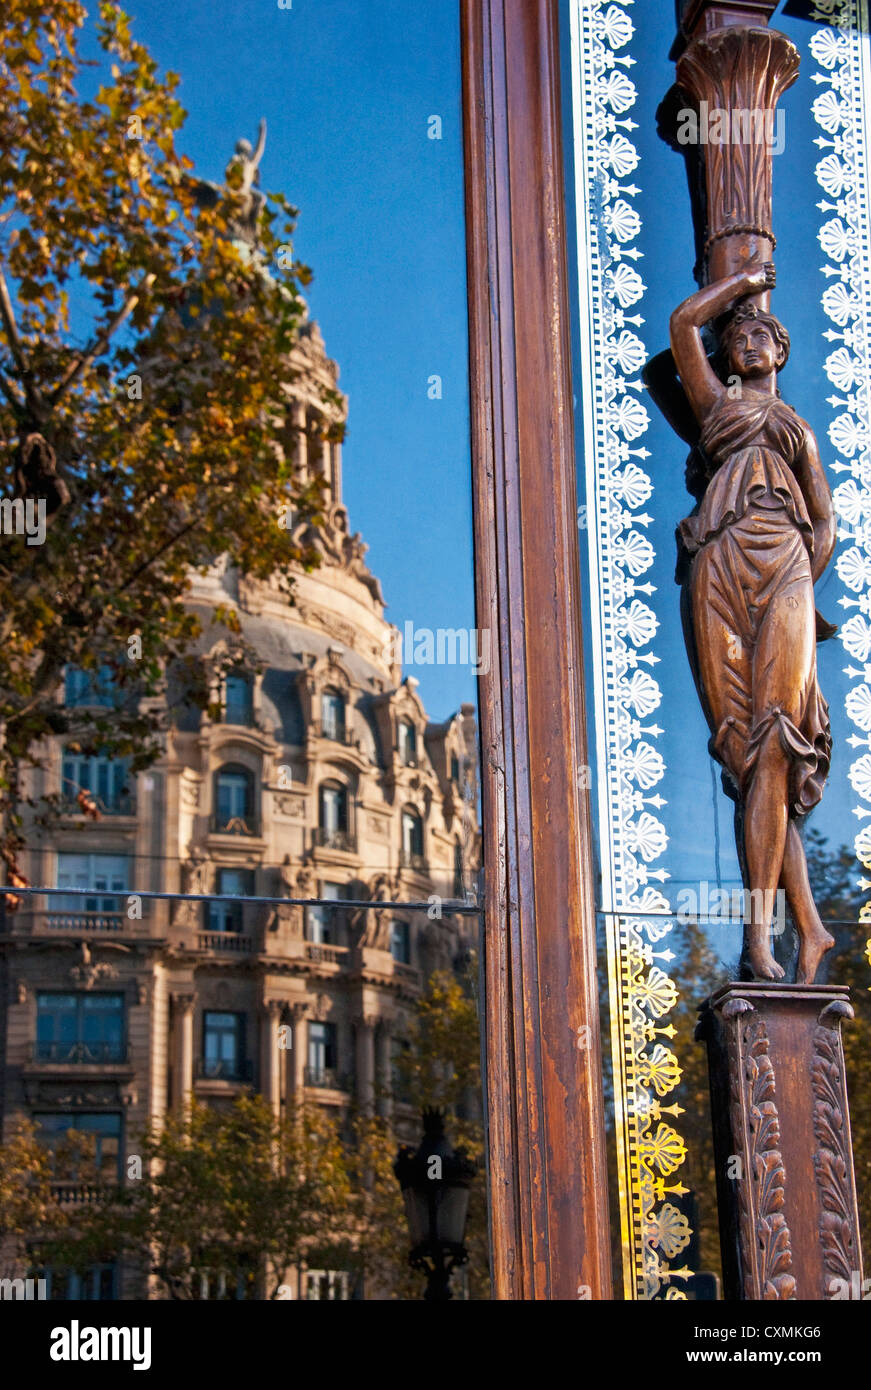 Architecture along Barcelona's Paseo de Gracia reflecting in window Stock Photo